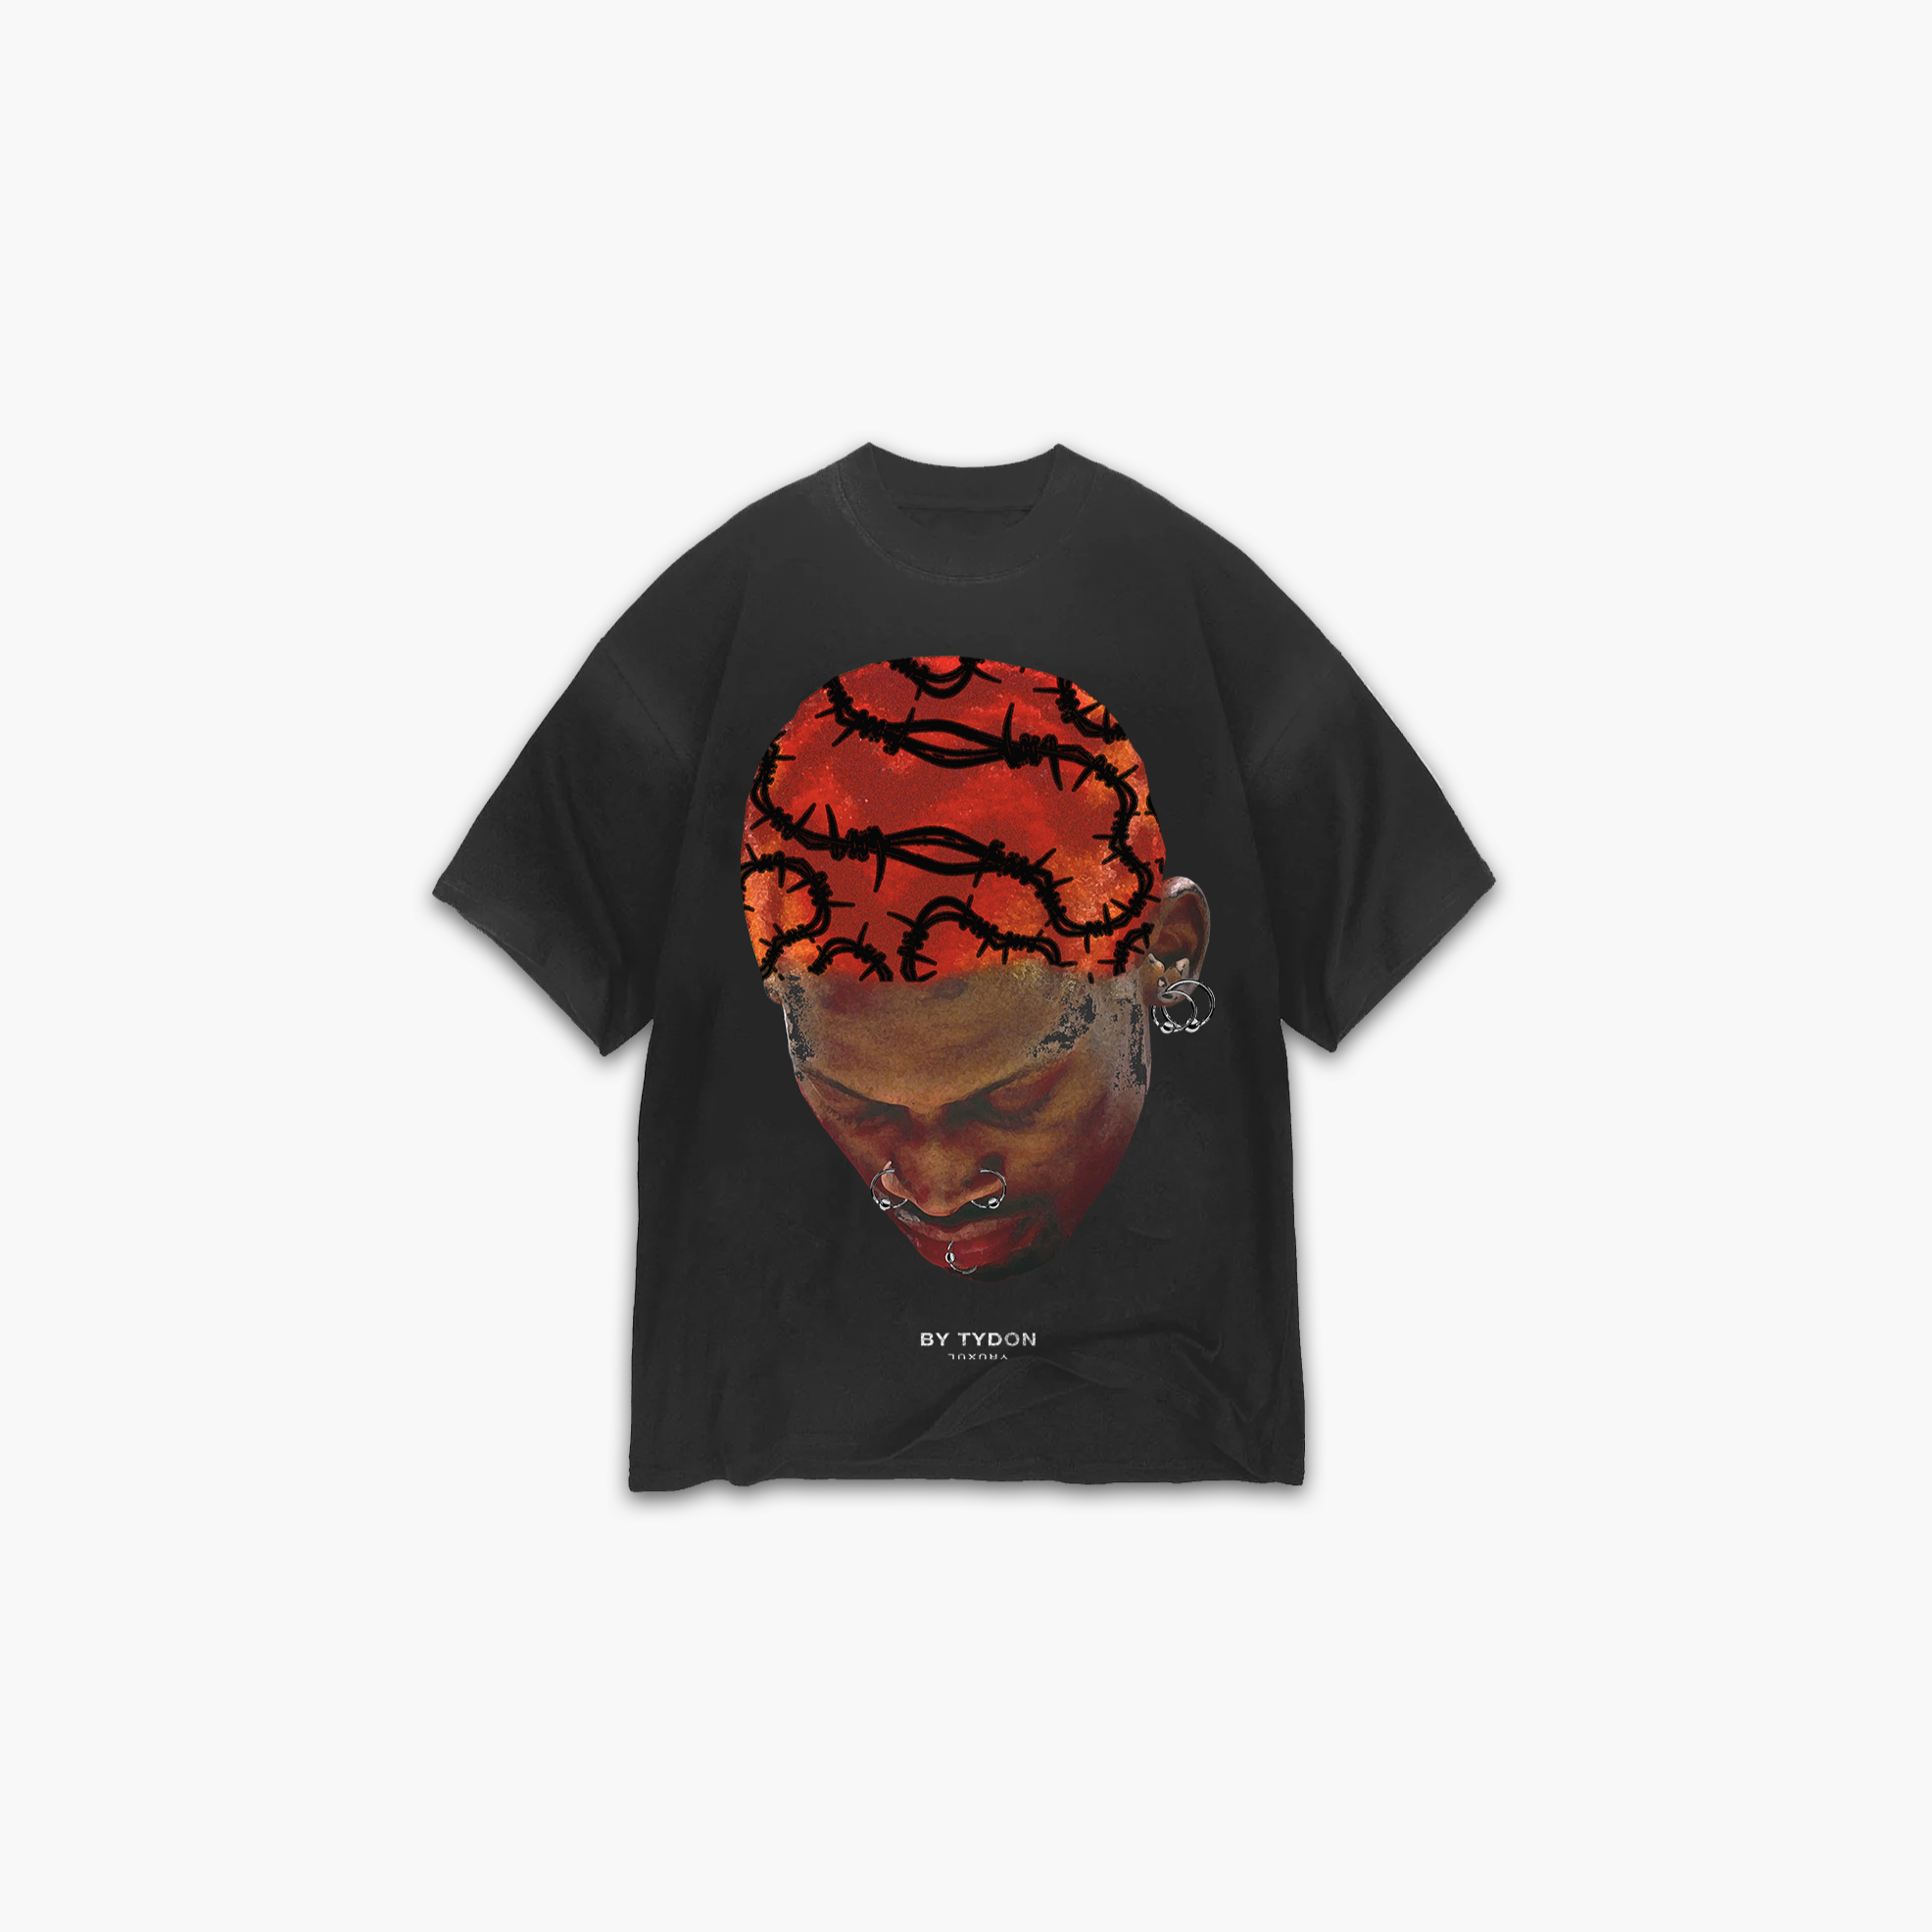 Washed Black/Red Rodman T-Shirt